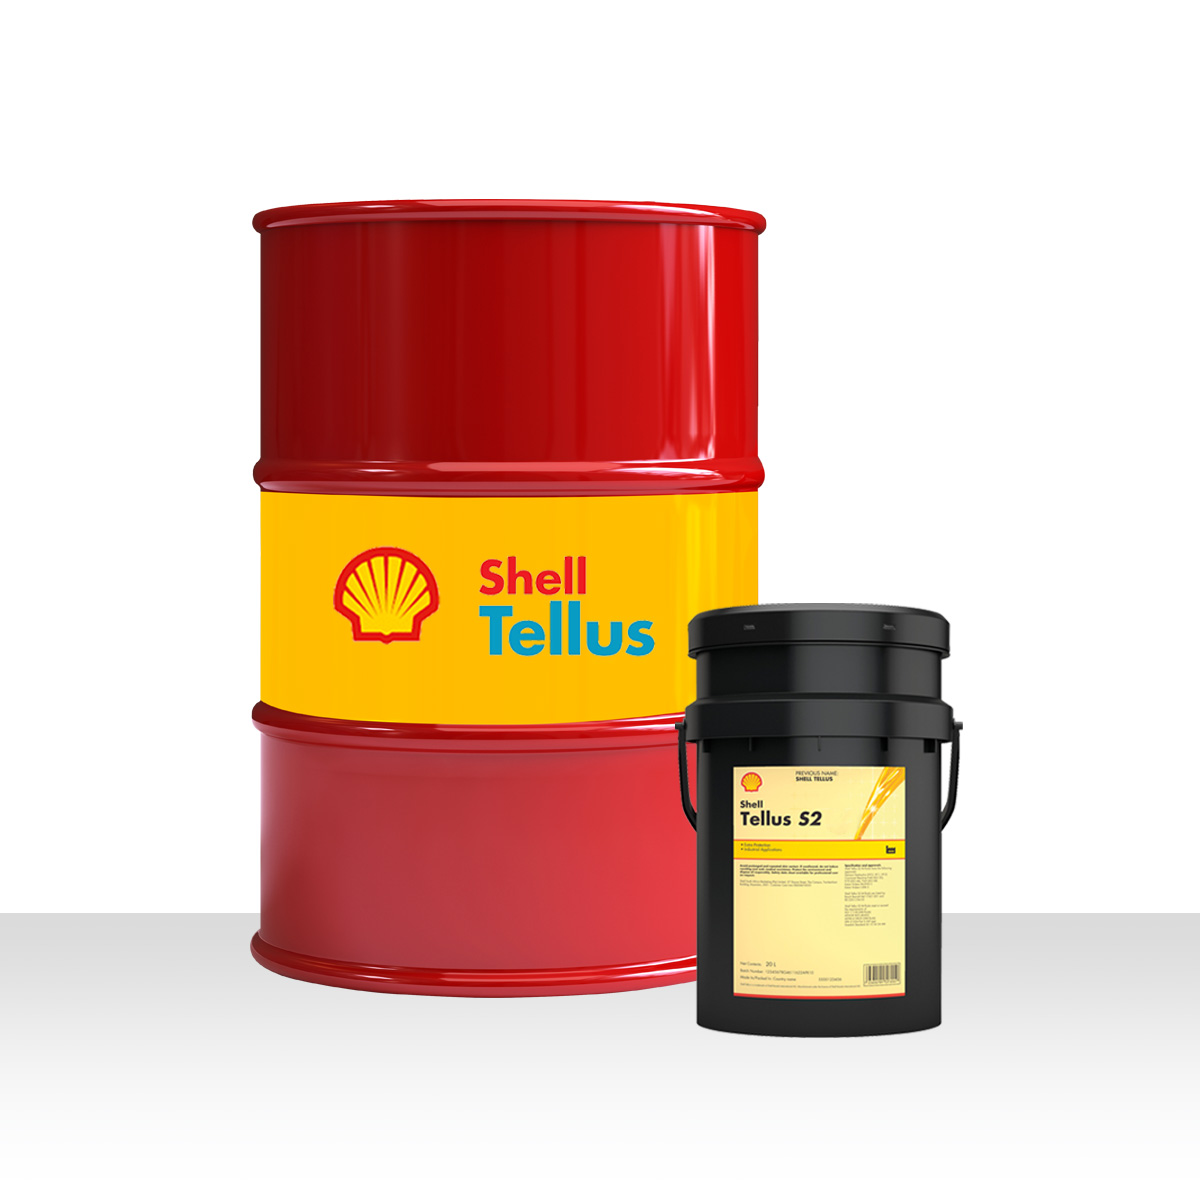 Shell Tellus S2 MX 46 Hydrauliköl HLP 46 • Hydrauliköle, Hydrauliköle,  Industrieöl • Schuster & Sohn Online-Shop HLP46 Hydrauliköl Shell